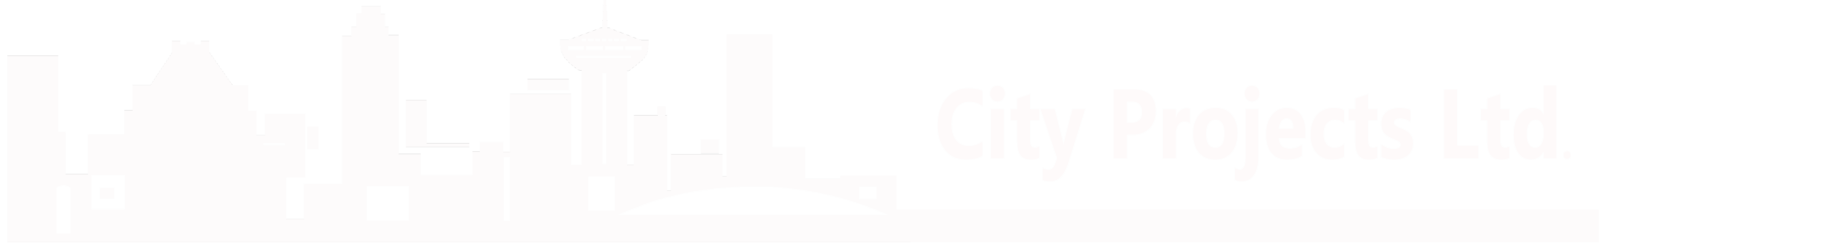 City Projects Ltd